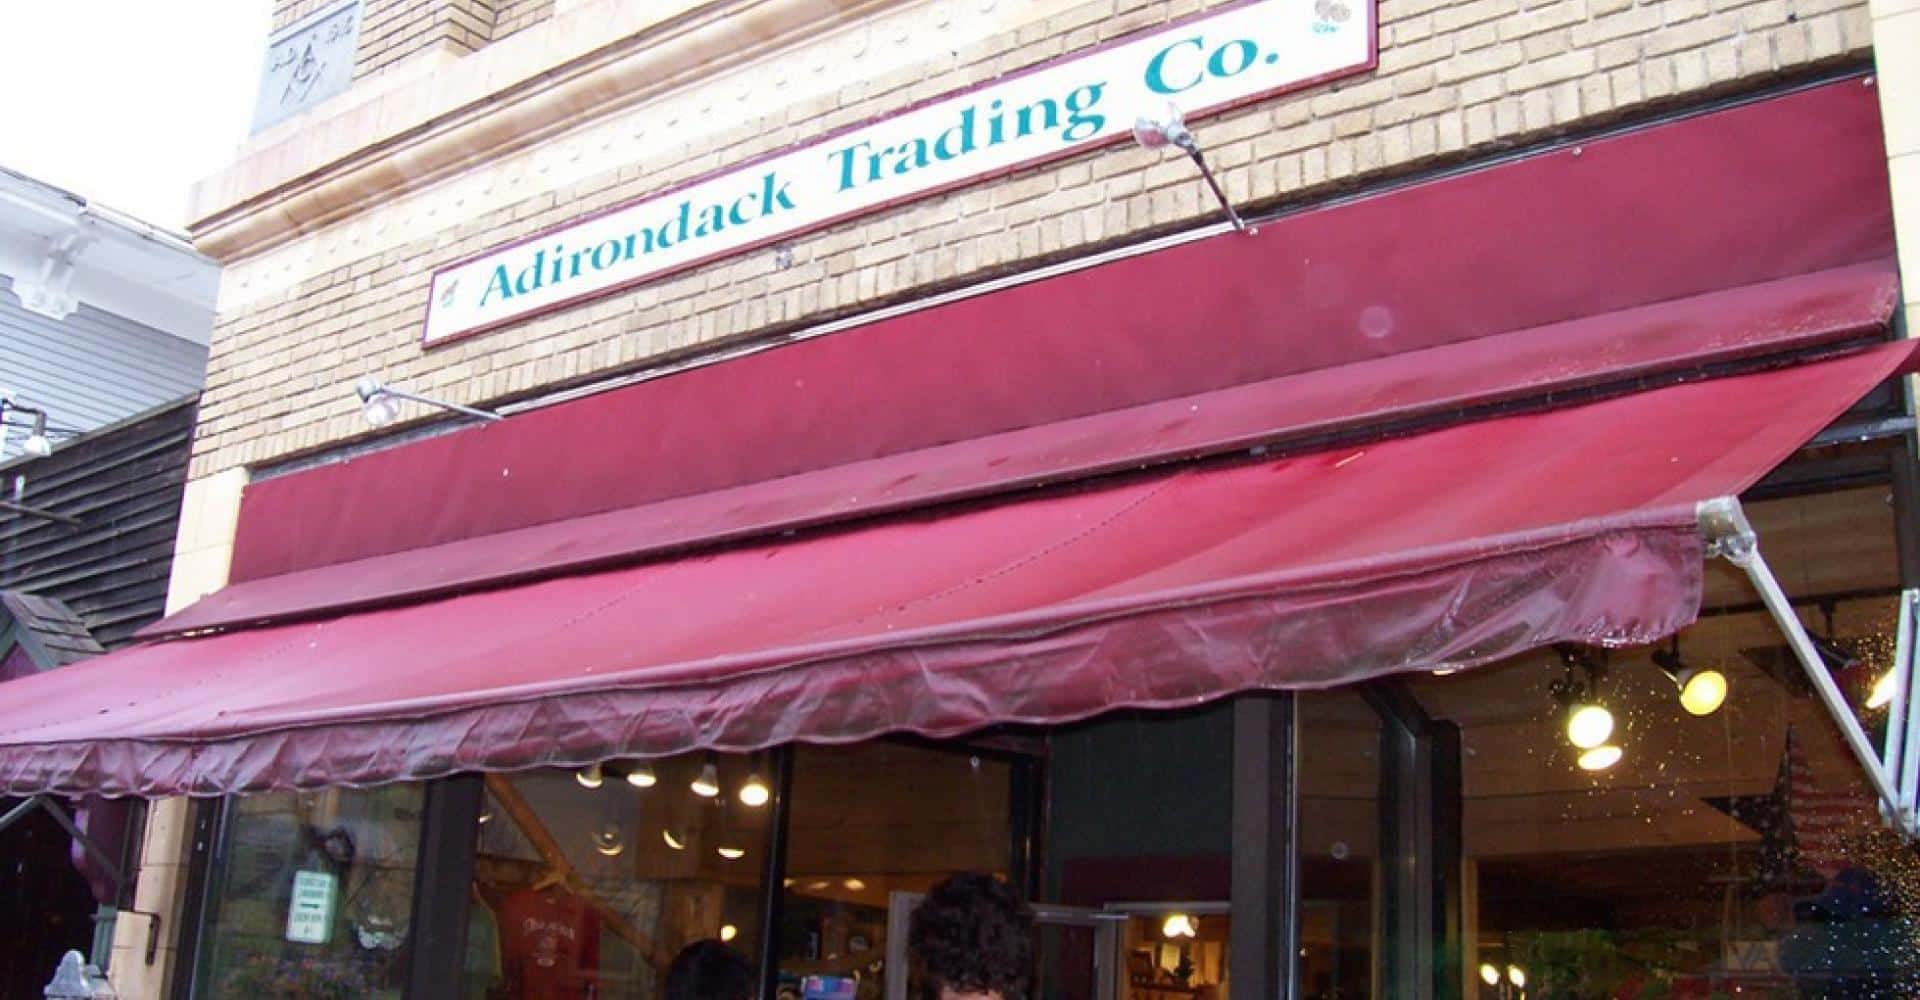 Adirondack Trading Company